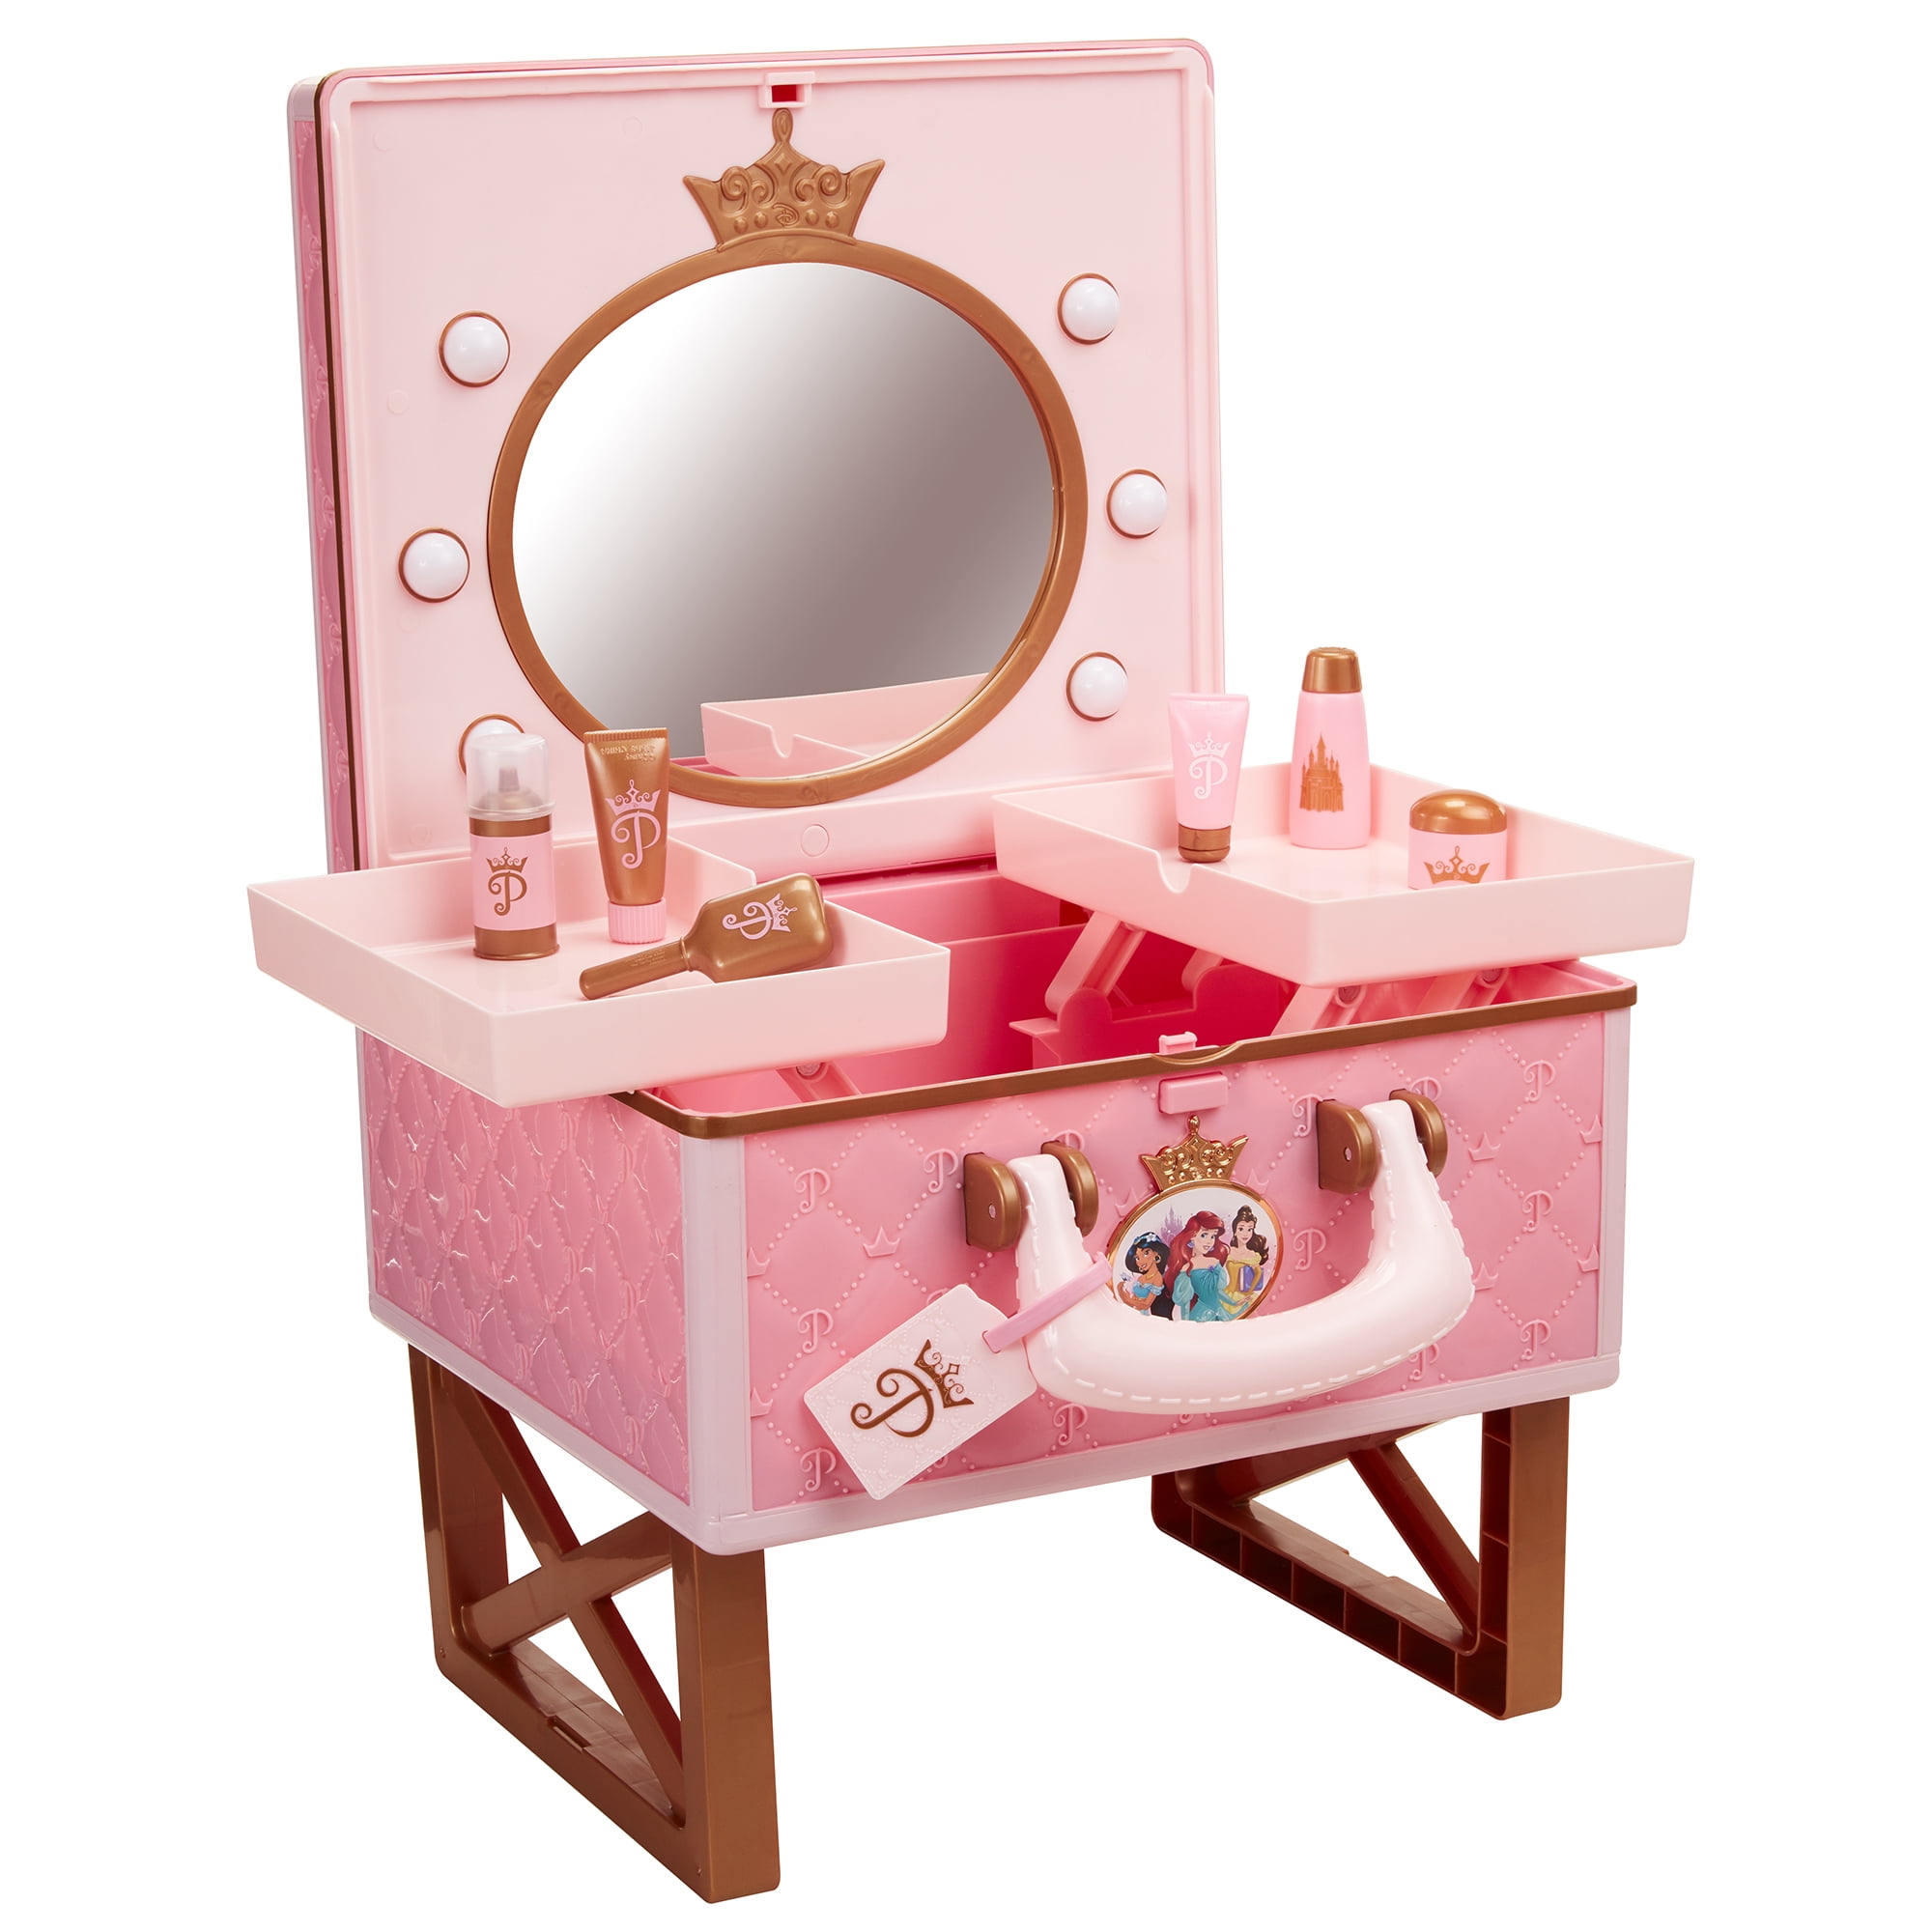 Disney Princess Style Collection Travel, Disney Princess Makeup Table And Chair